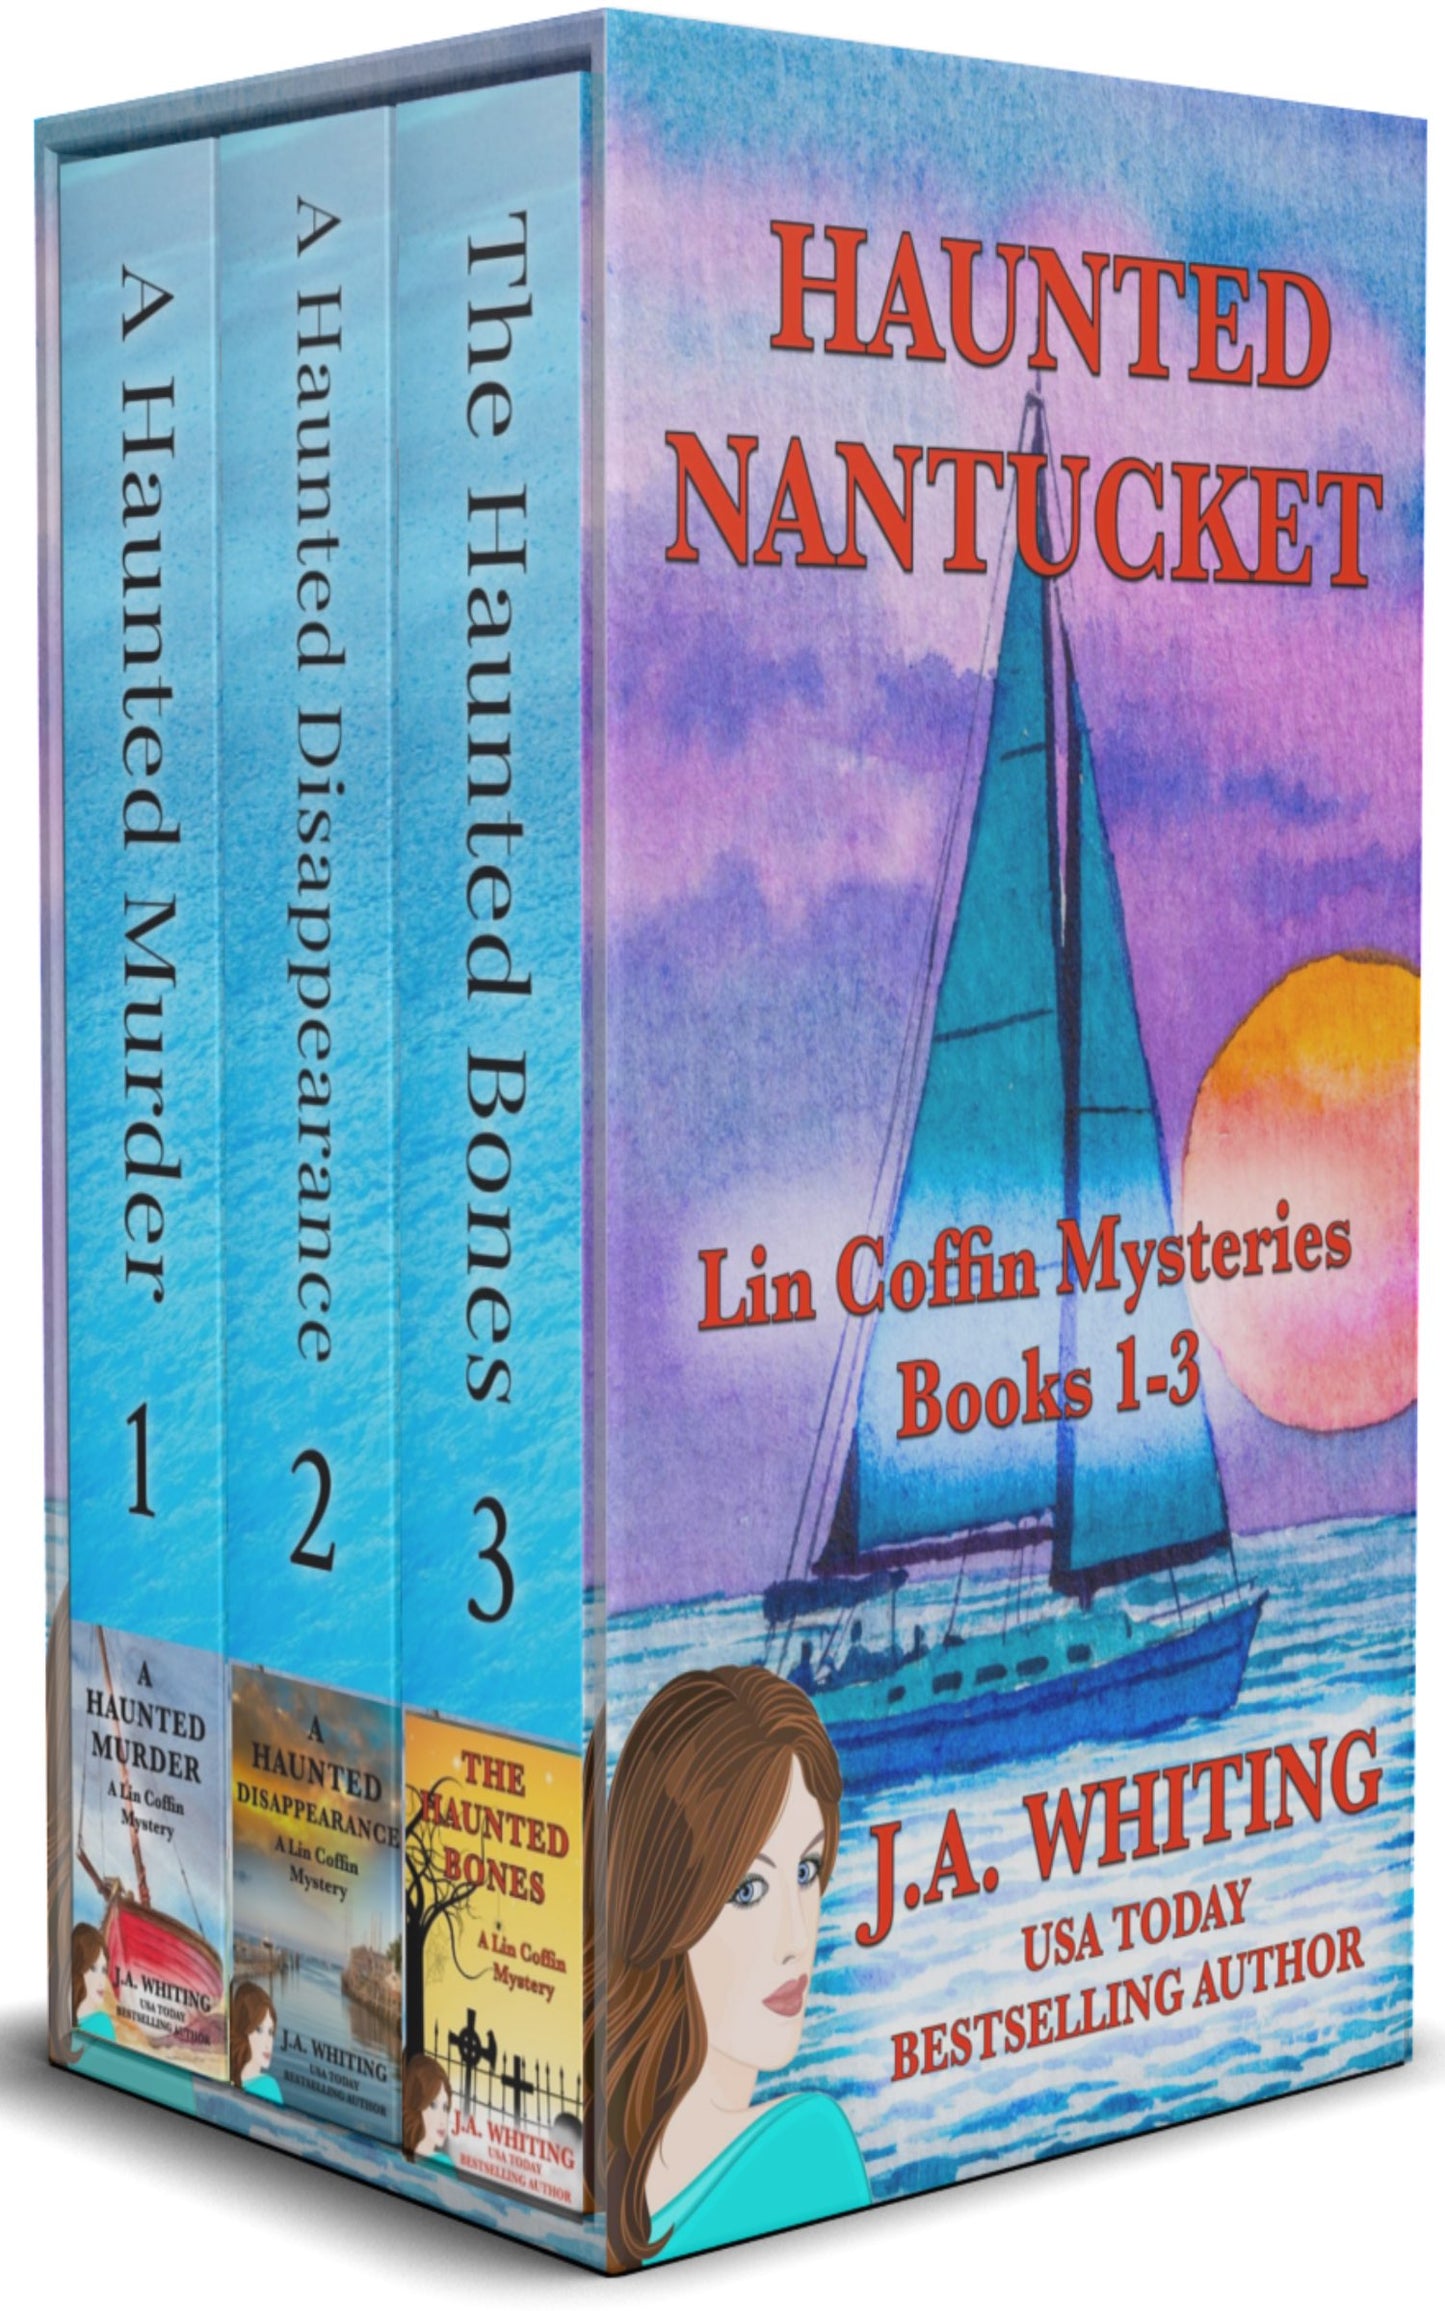 Haunted Nantucket: Lin Coffin Mysteries Books 1-3 (EBOOK)